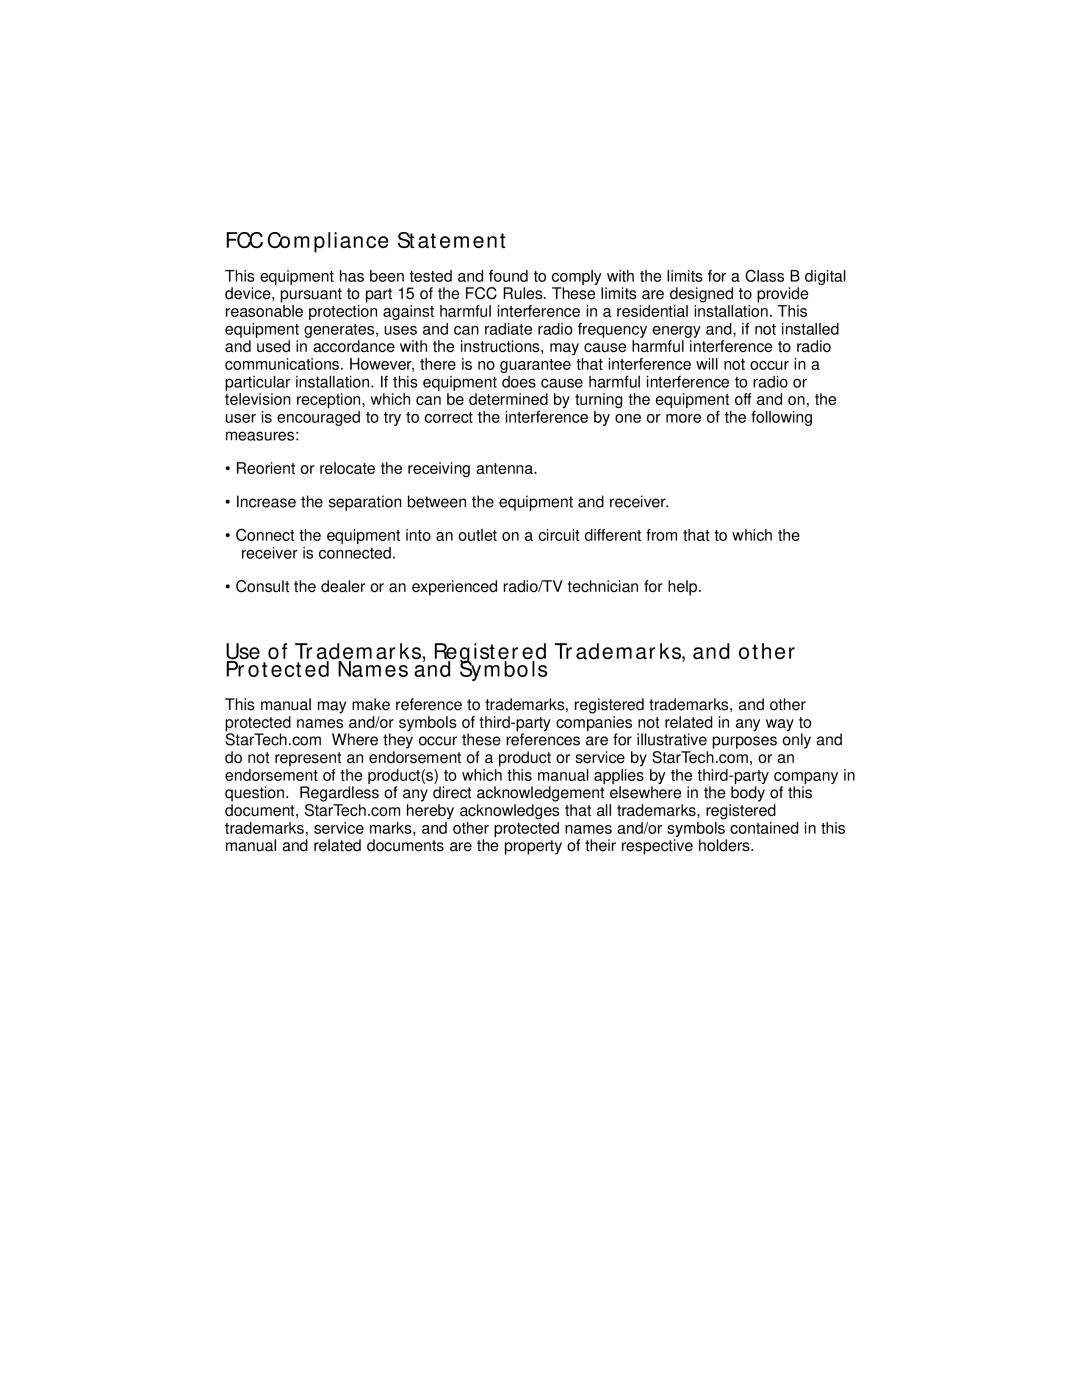 StarTech.com PCI1394B_3 instruction manual FCC Compliance Statement 